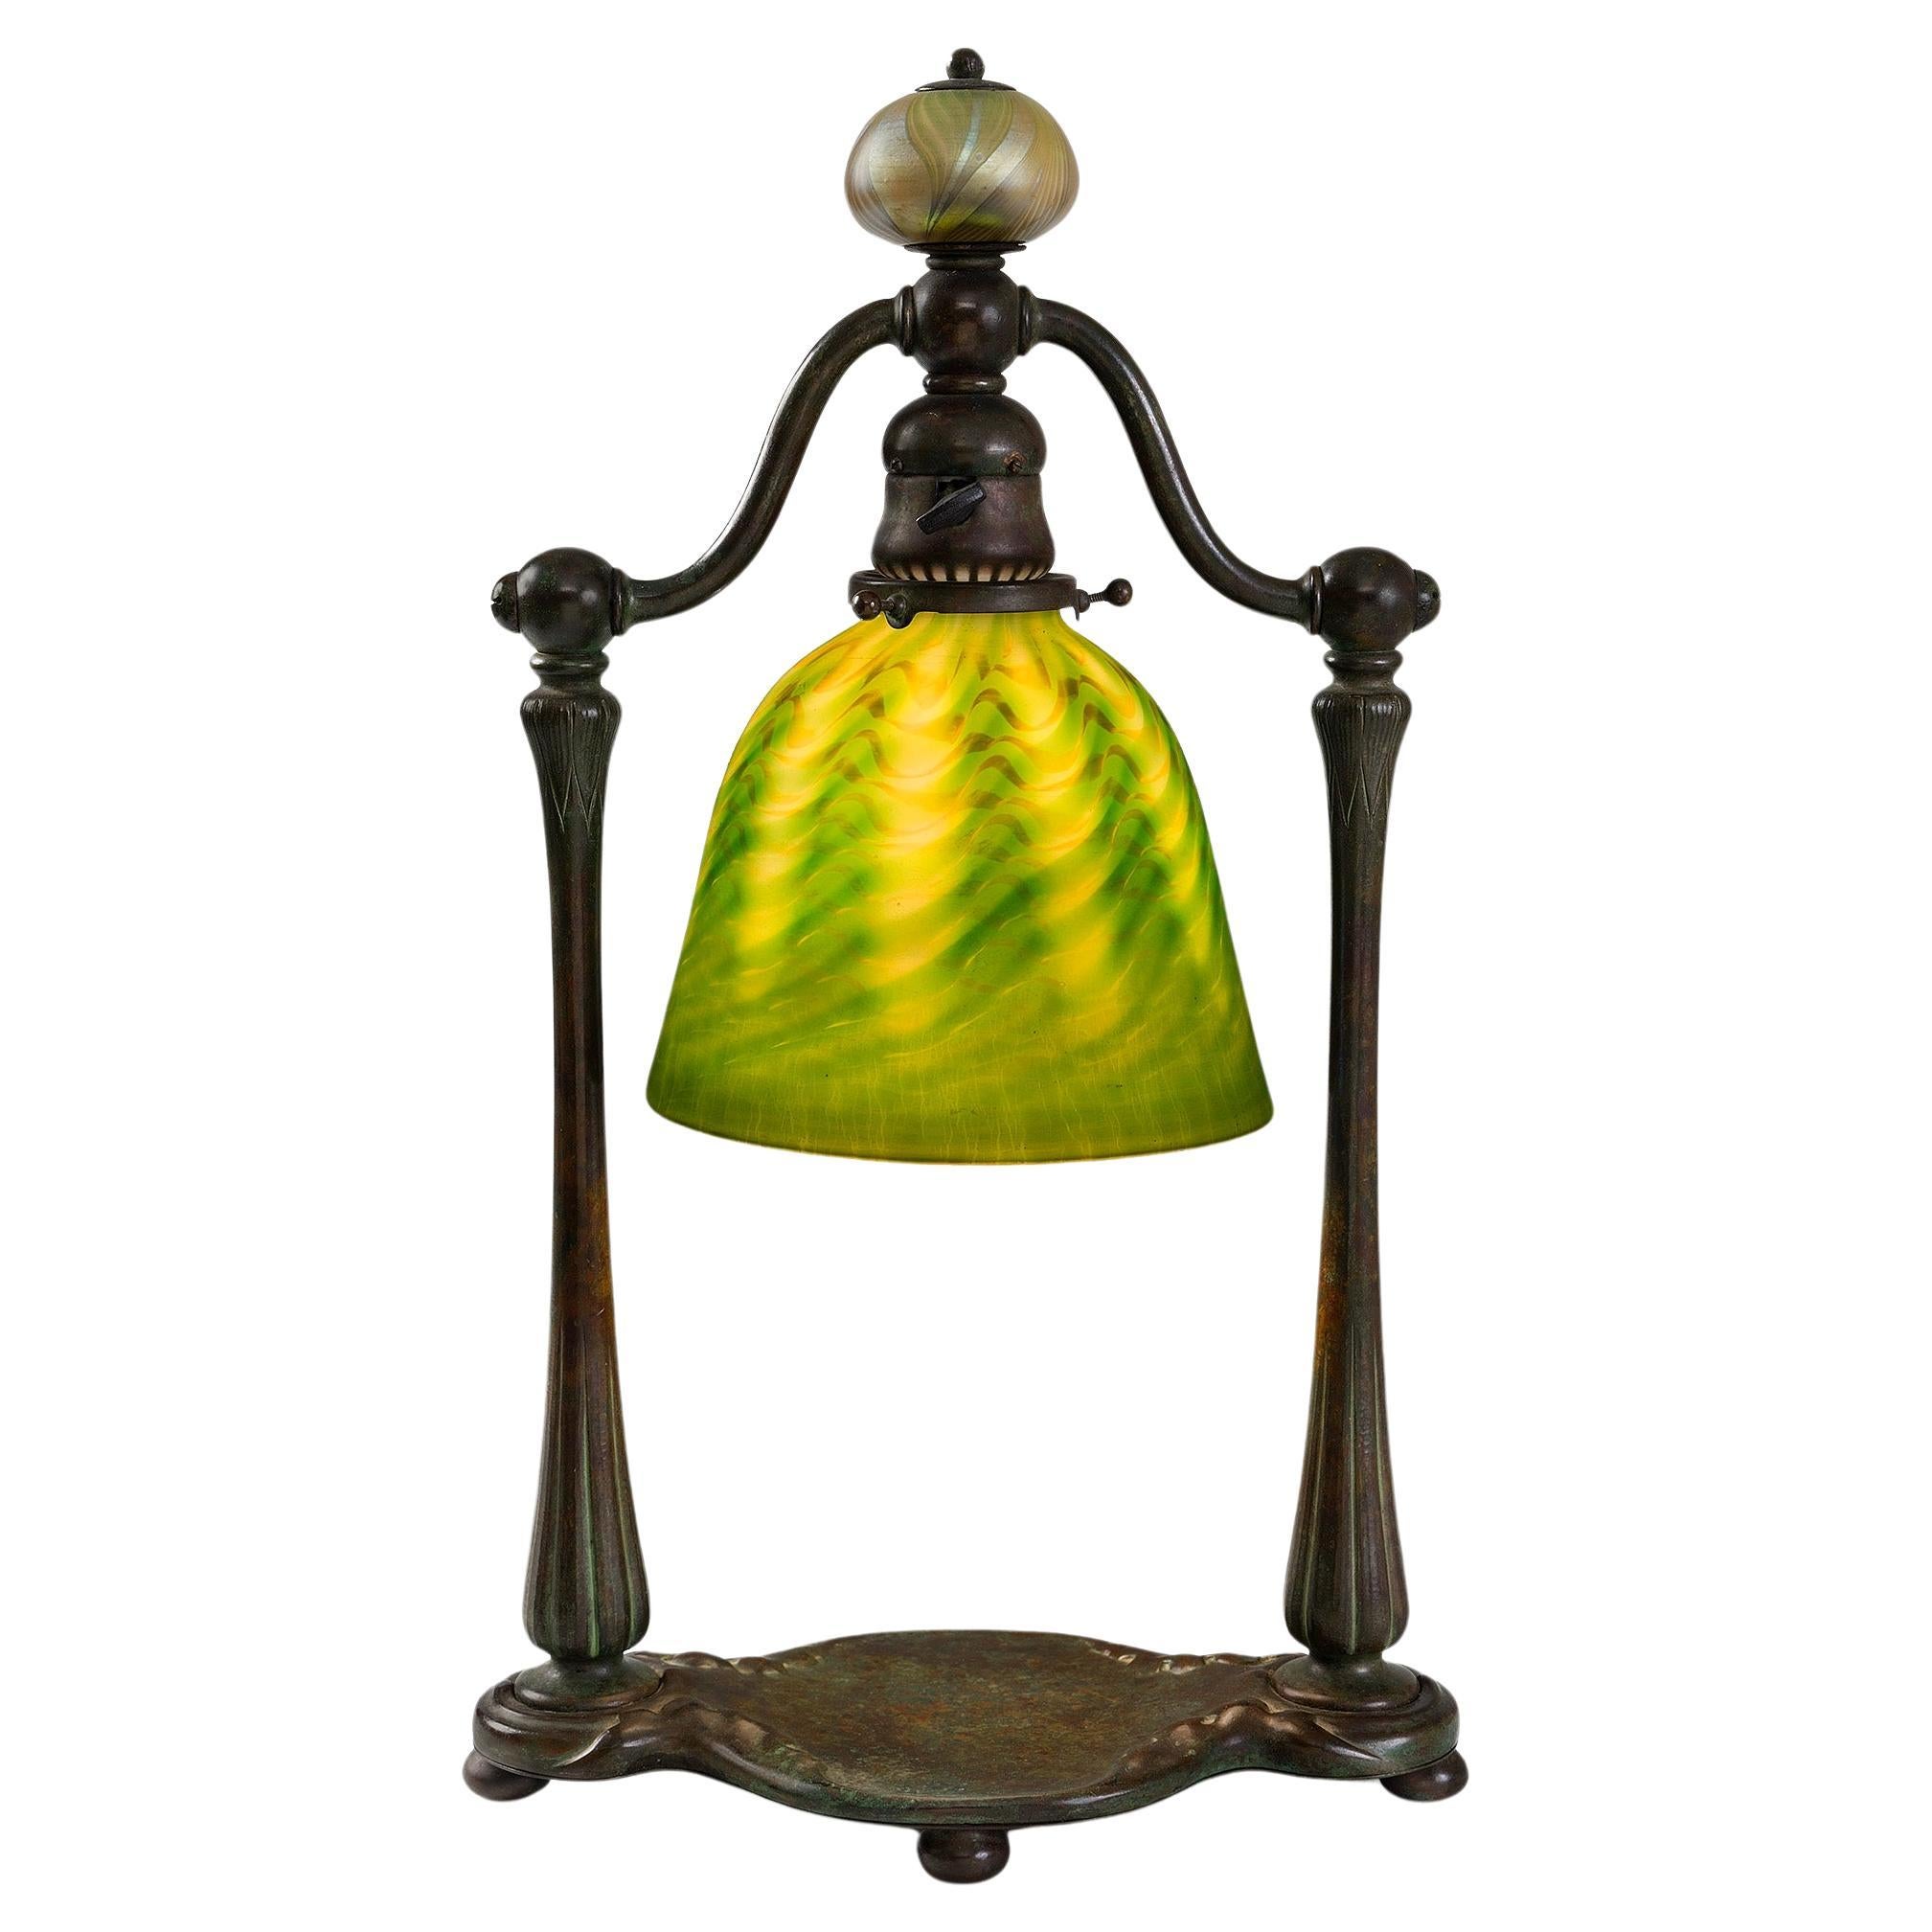 Tiffany Studios New York "Damascene Lighthouse" Desk Lamp